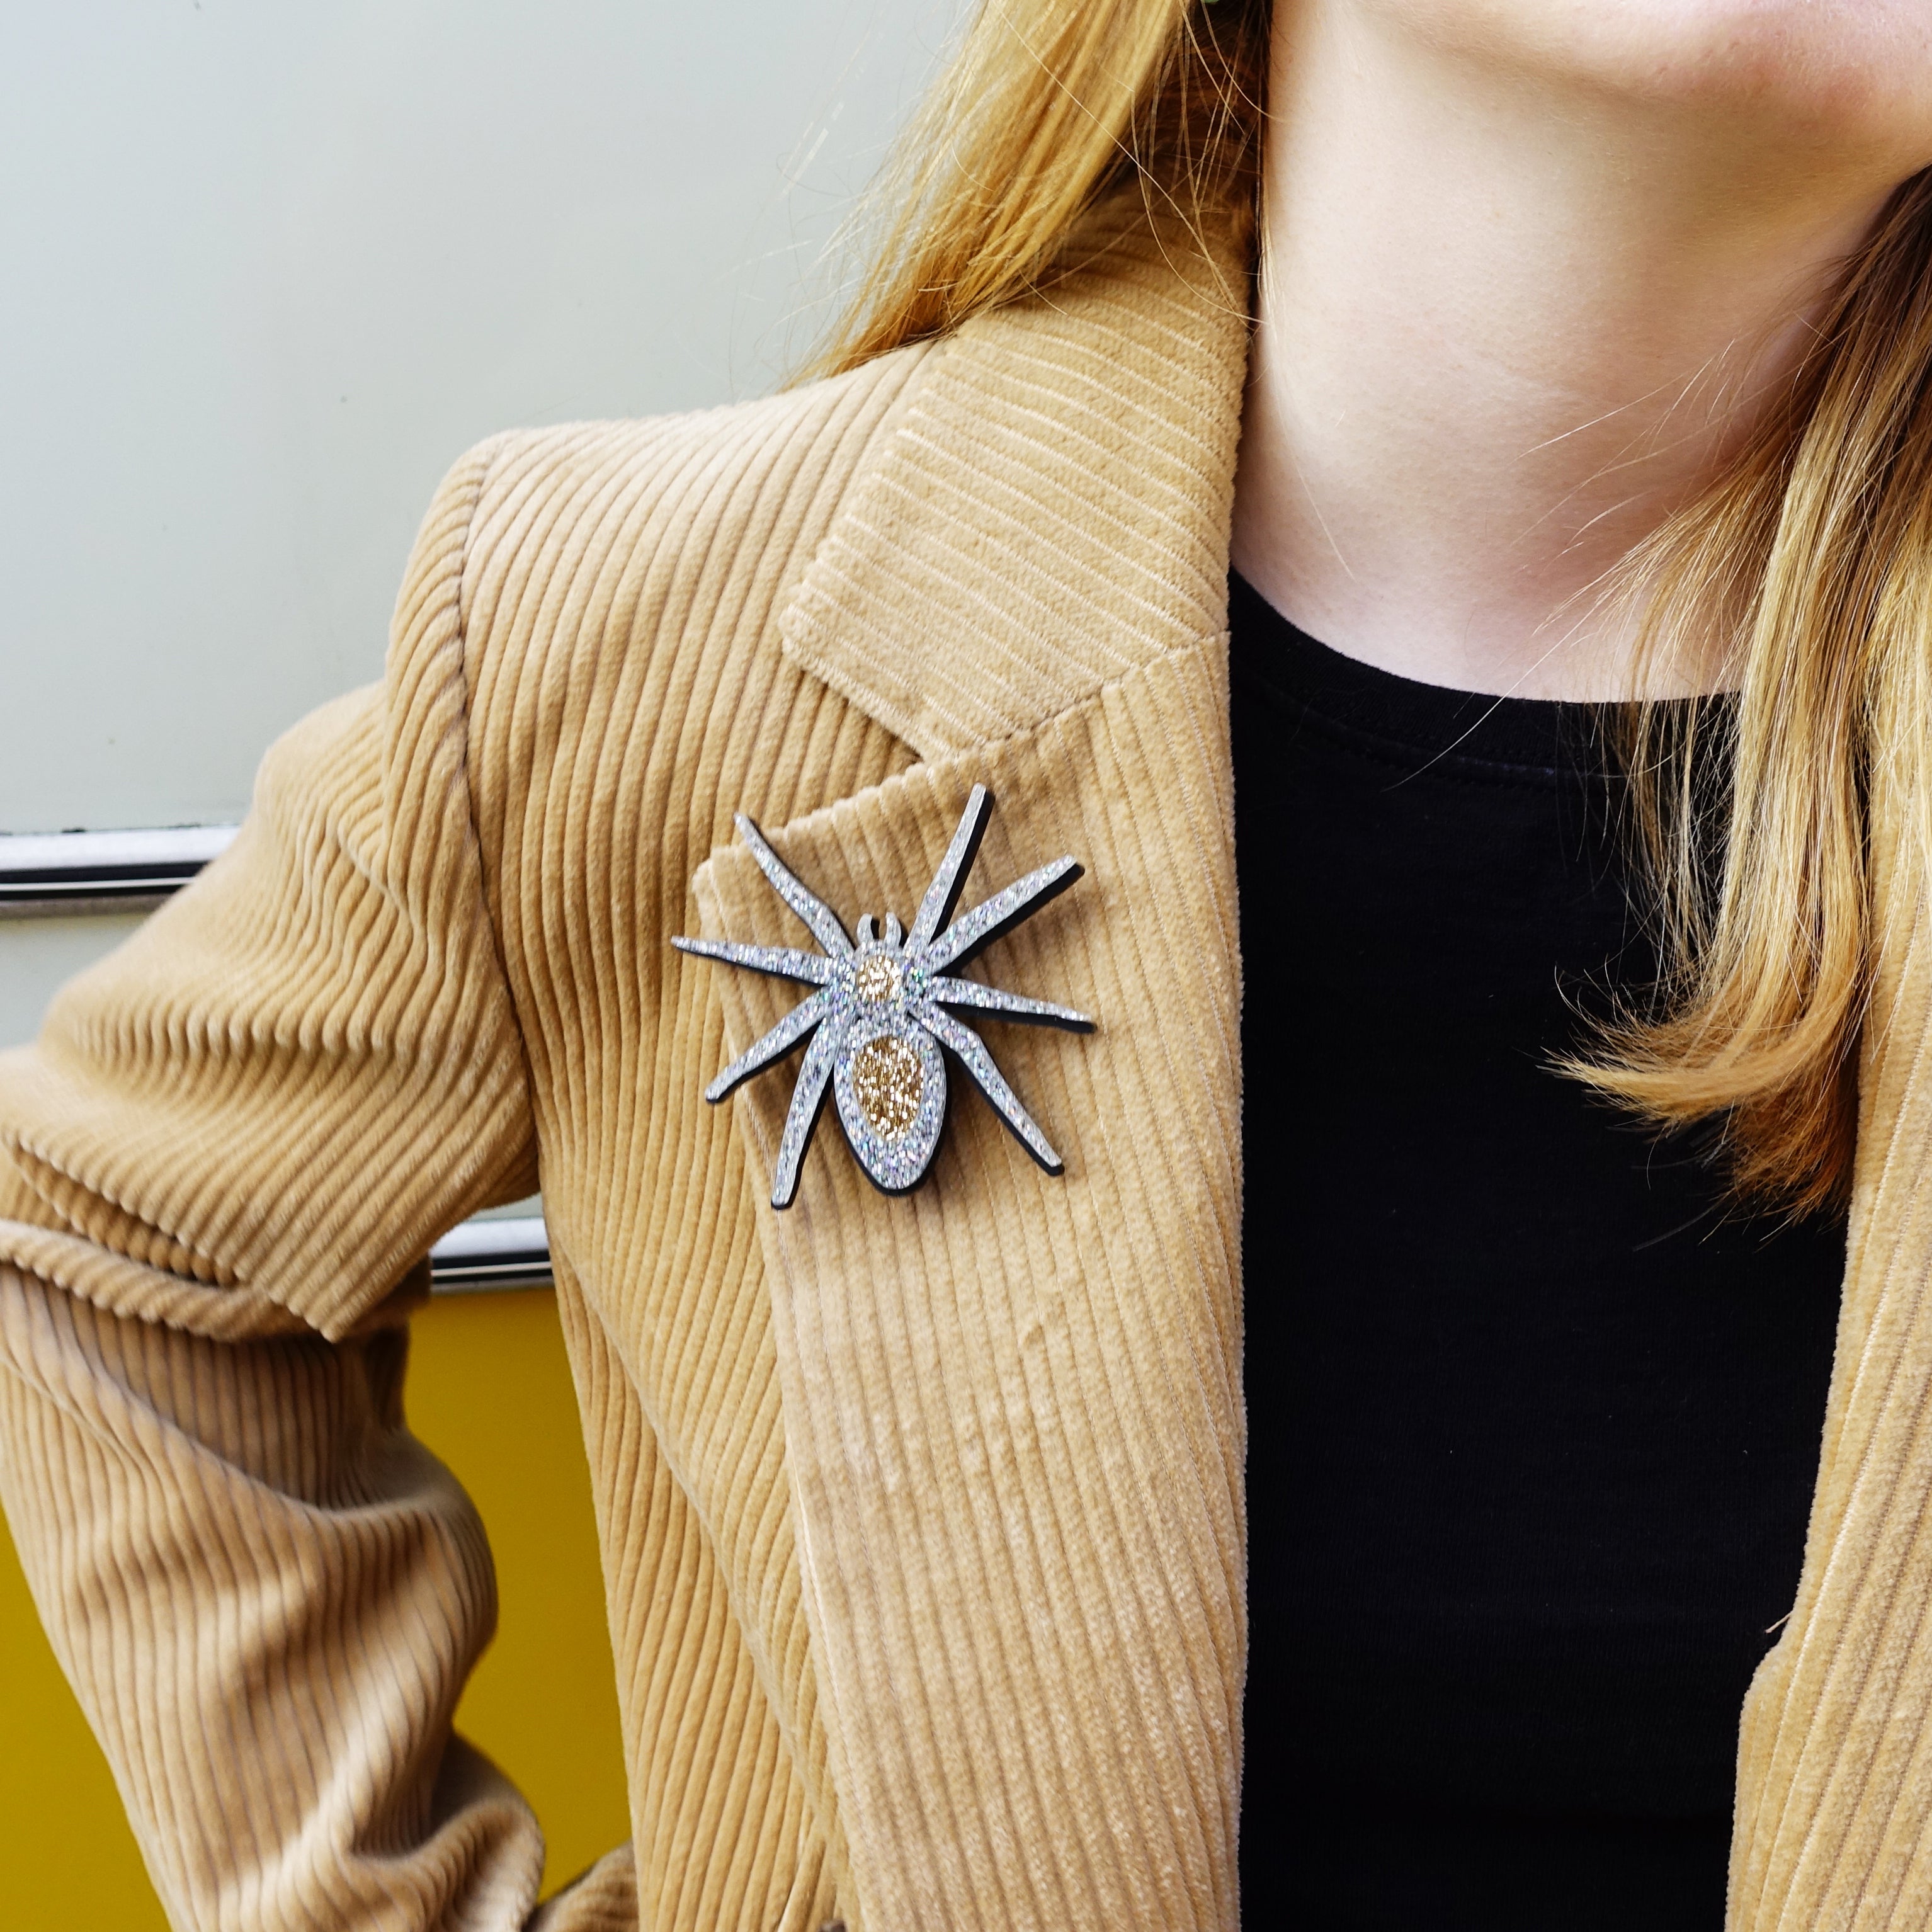 Silver Lady Hale Spider brooch shown worn on a jacket. 